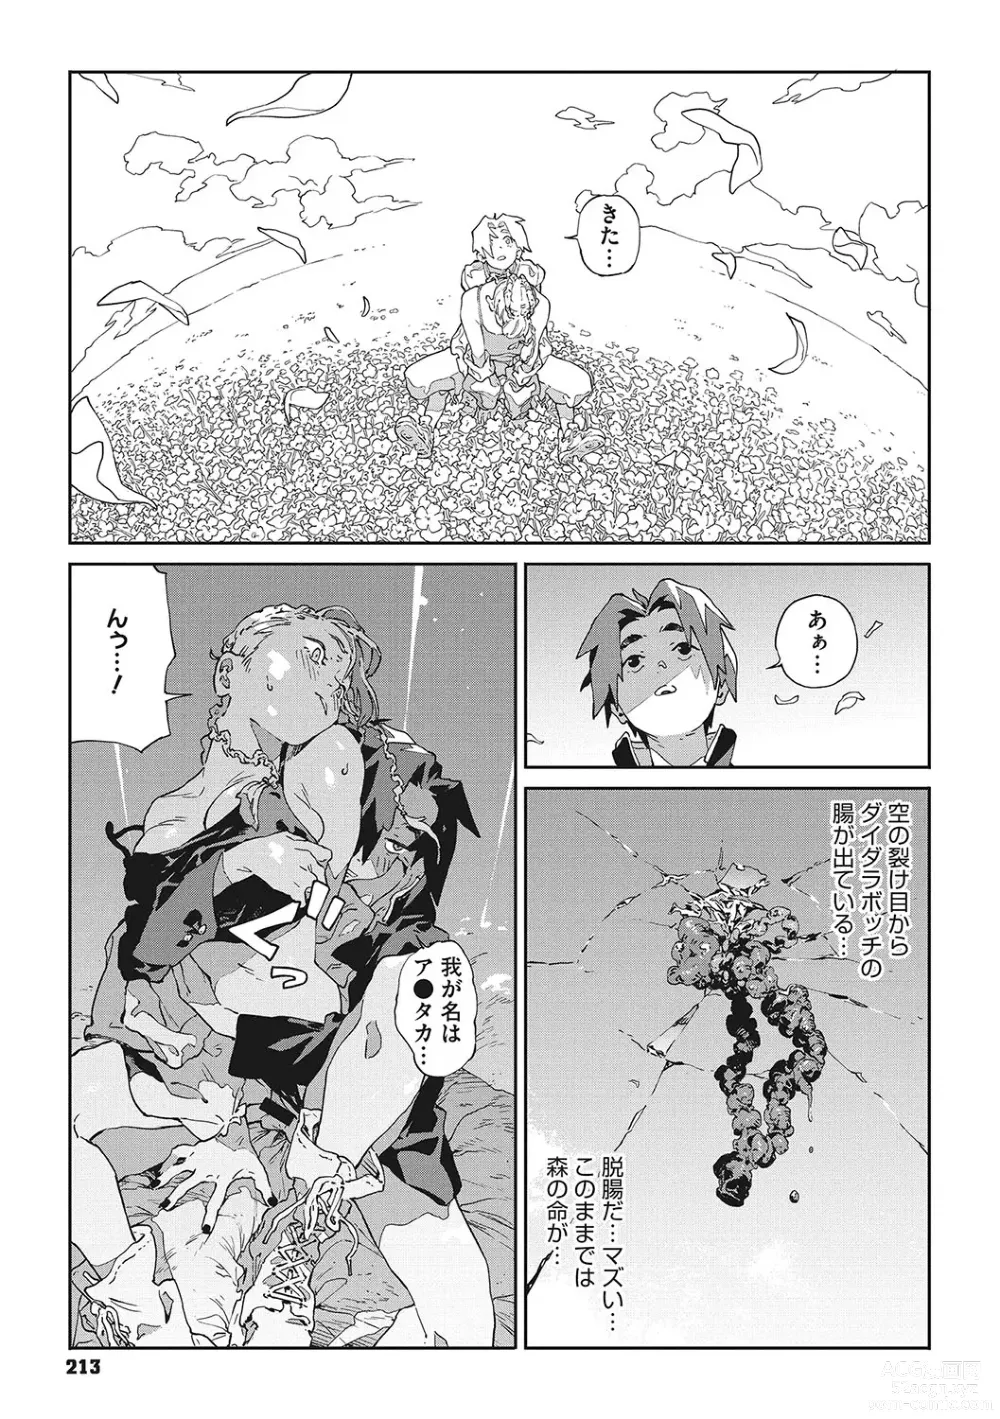 Page 212 of manga Ito o Yoru